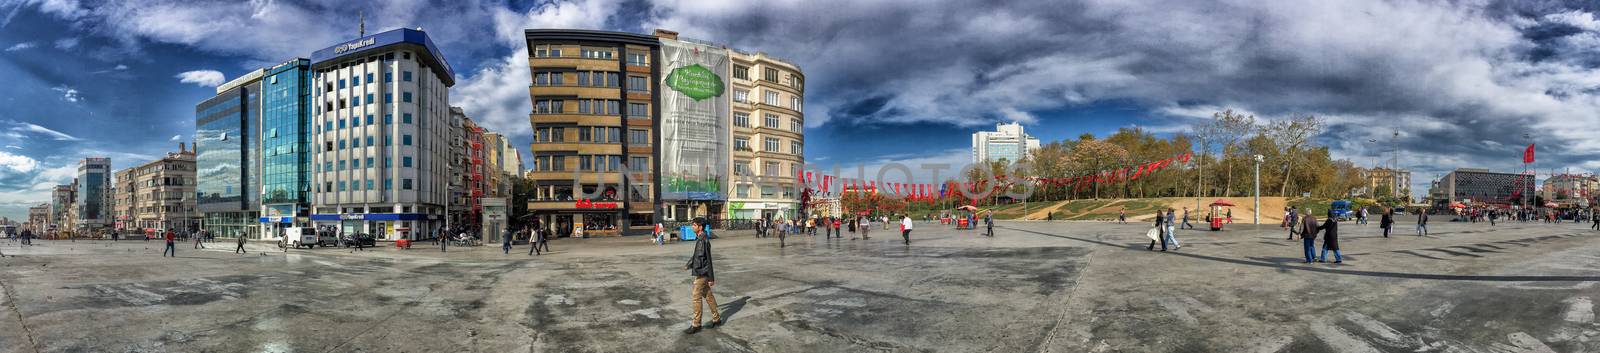 ISTANBUL, TURKEY - OCTOBER 23, 2014: People walking at Taksim Sq by jovannig